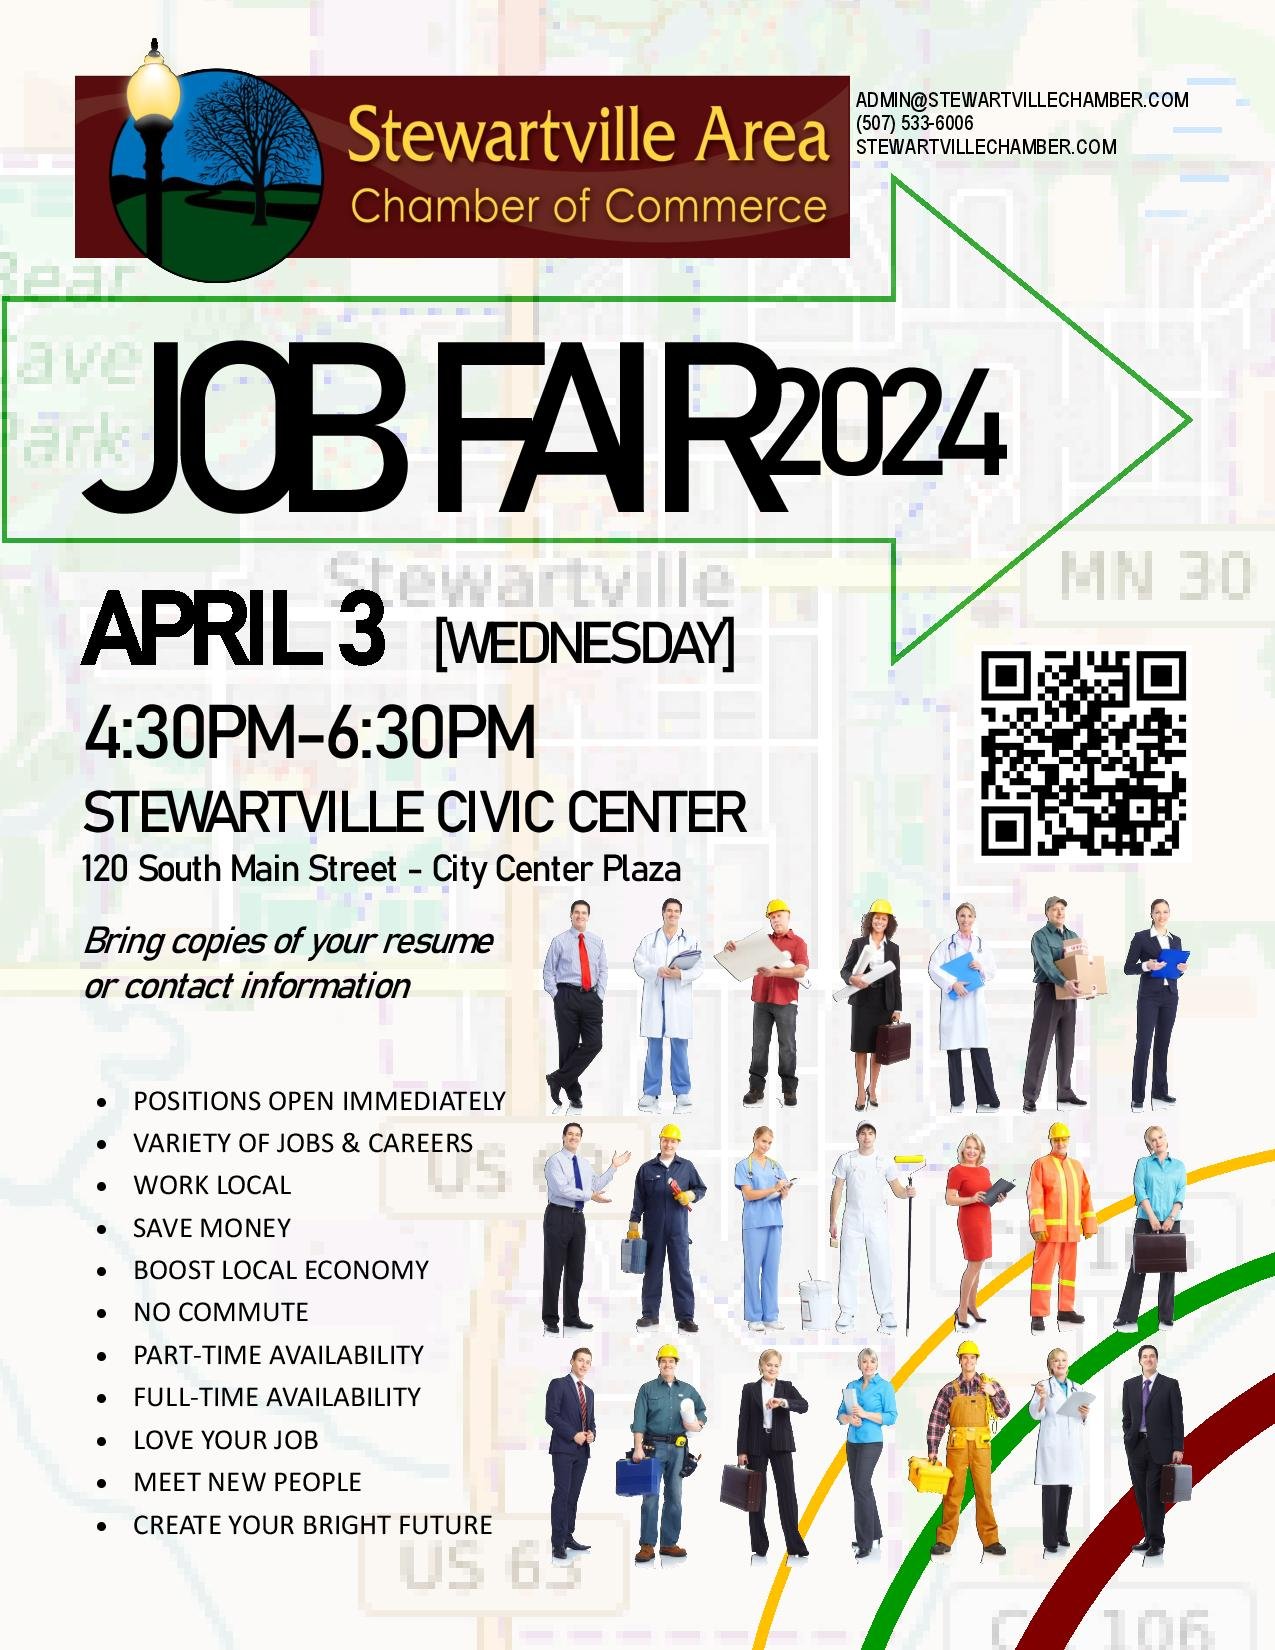 APRIL 3 Job Fair 2024 Flyer-page-001.jpg